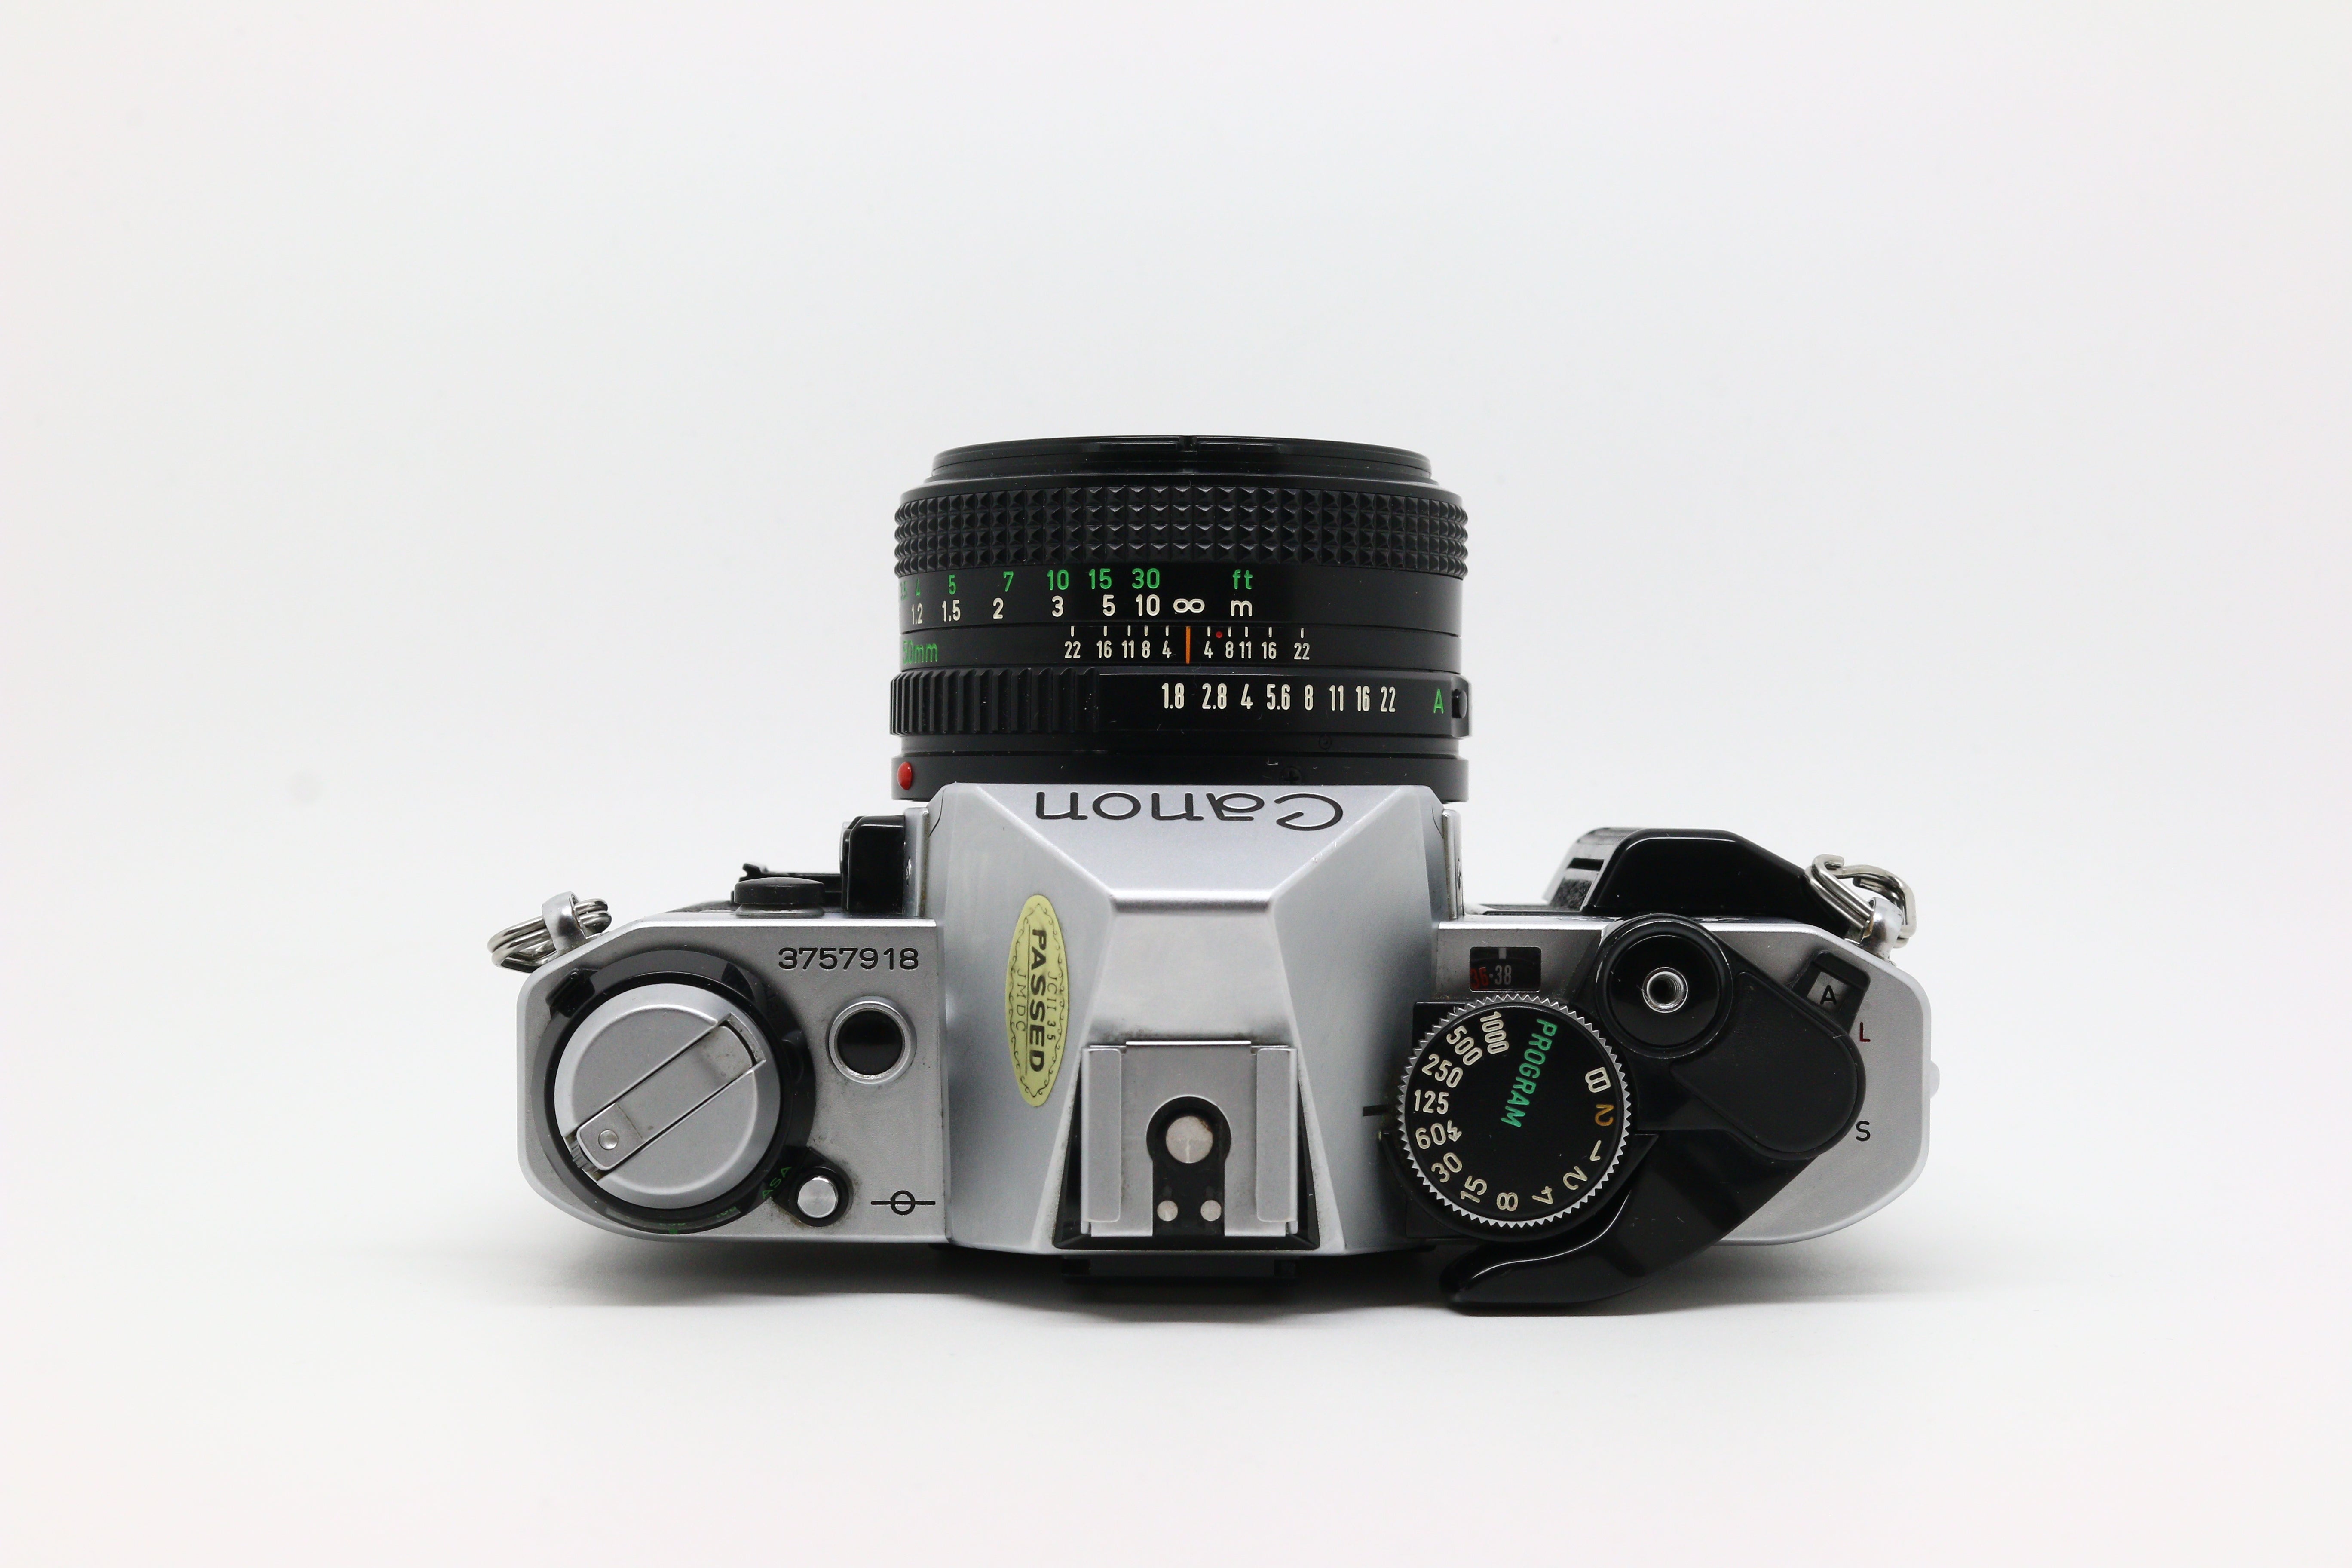 Canon AE1 Program & 50mm 1.8 FDn Lens